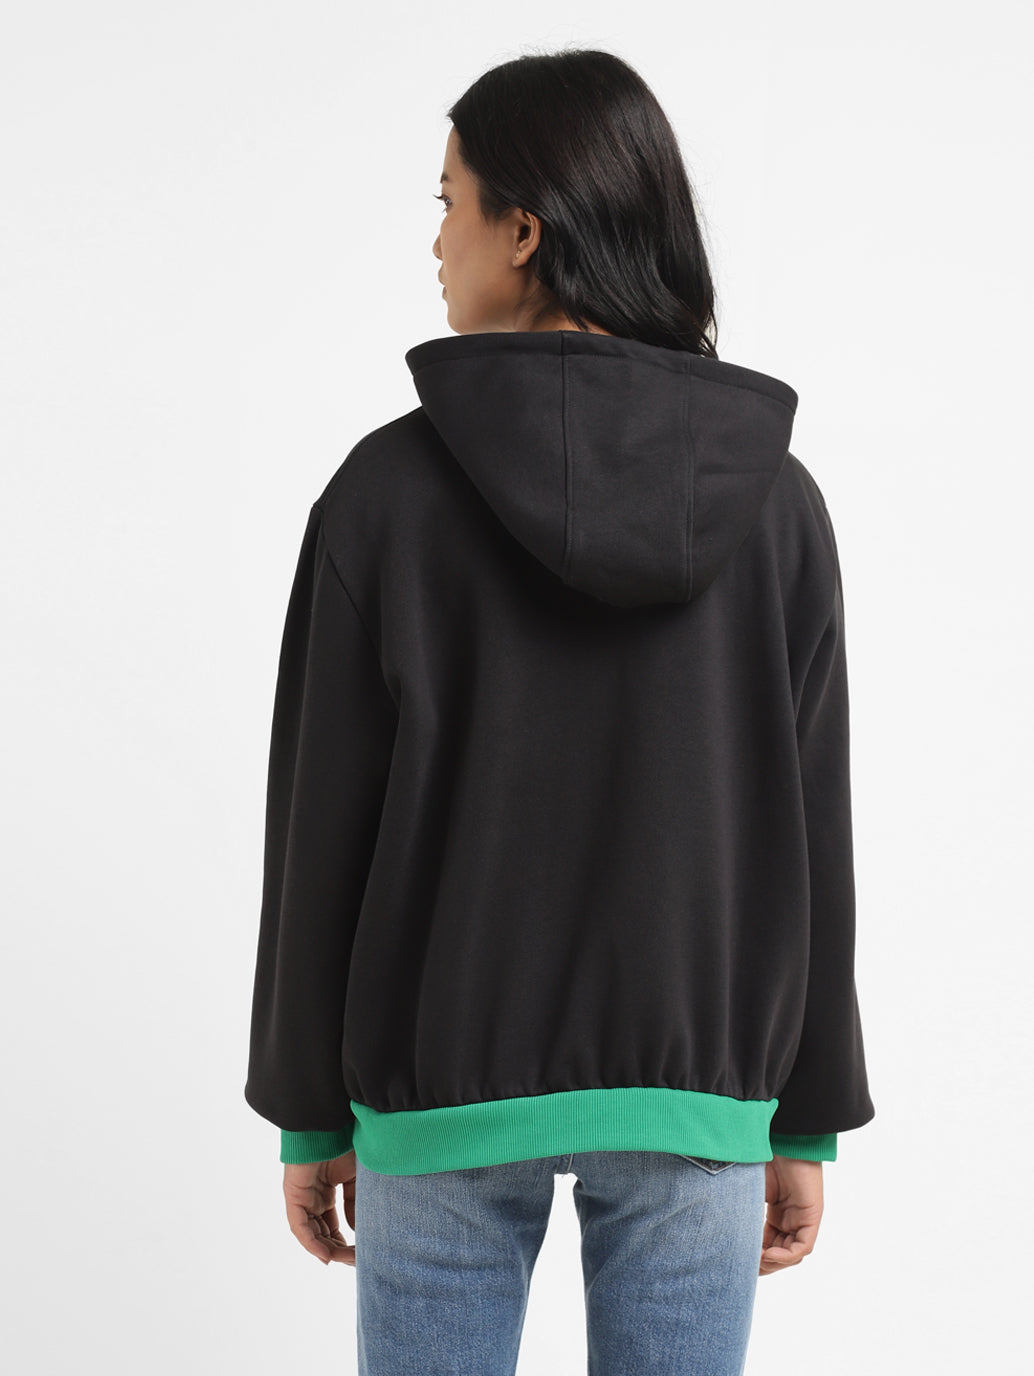 Women's Brand Logo Black Hooded Sweatshirt